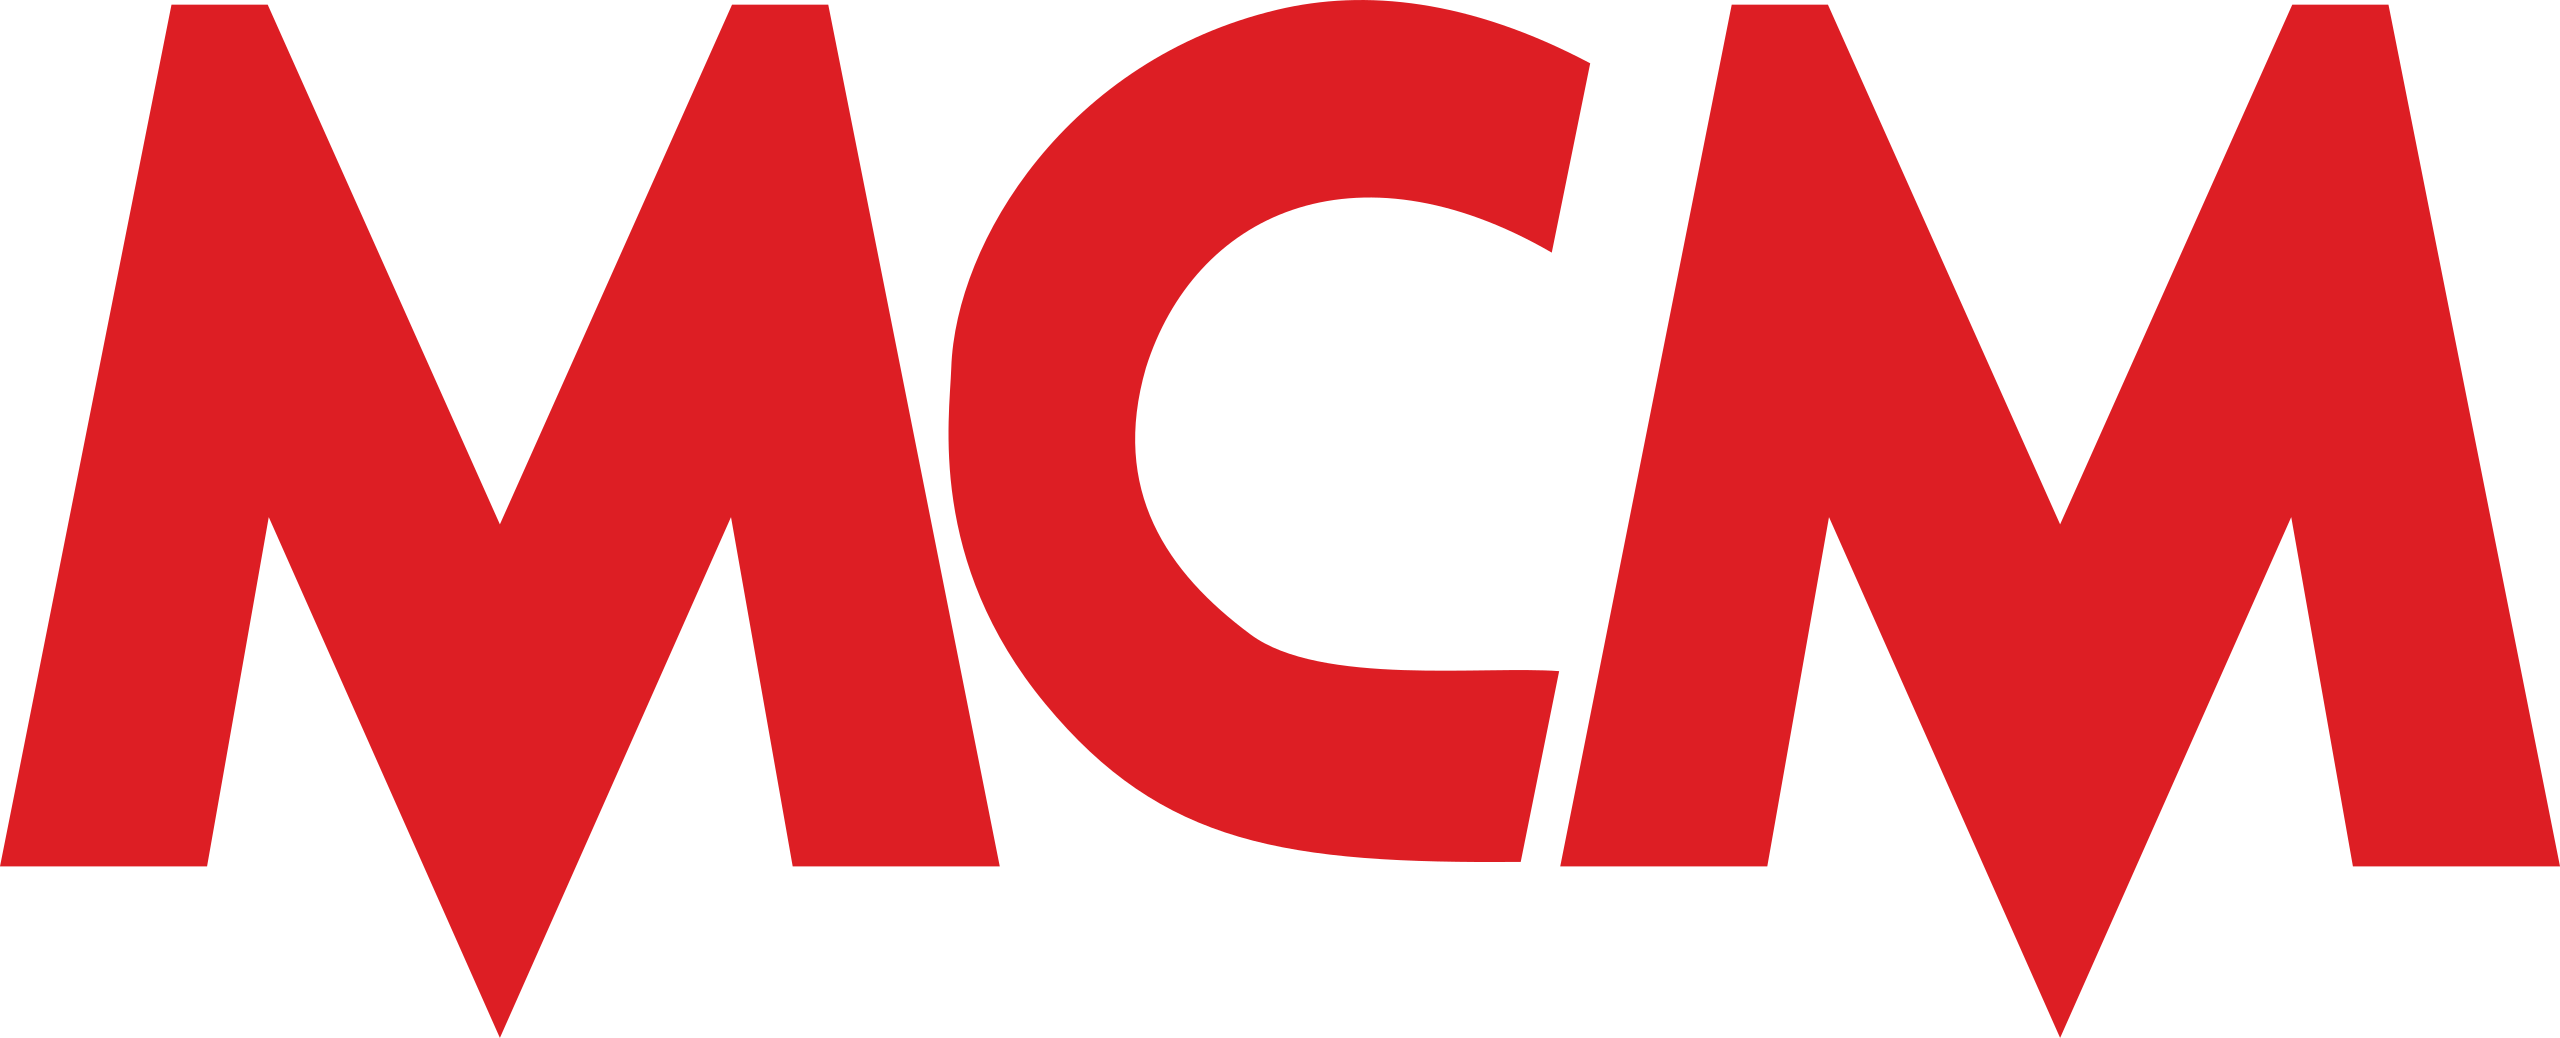 File:MCM logo.svg - Wikimedia Commons